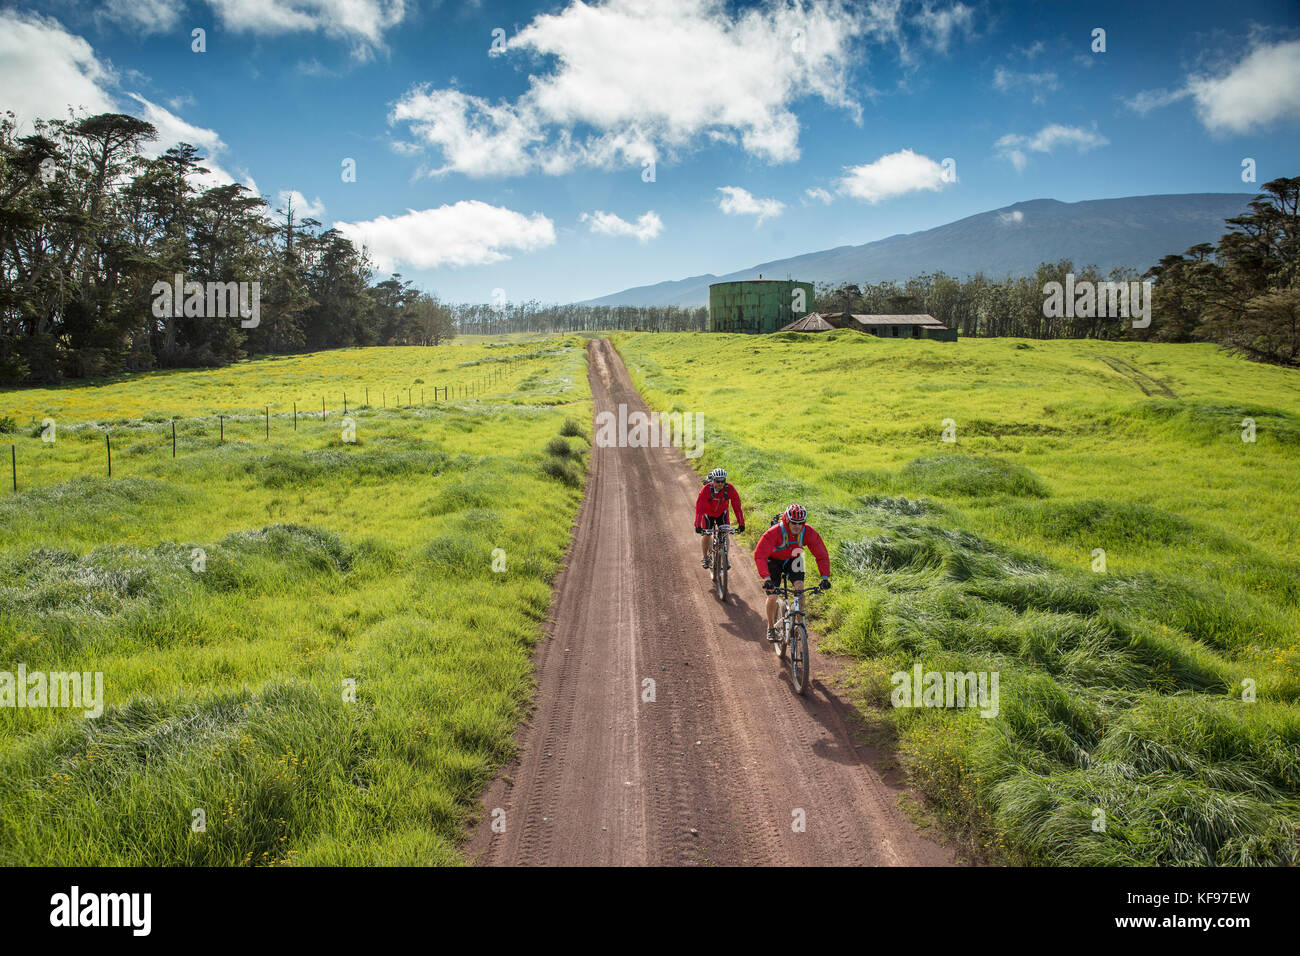 USA, Hawaii, The Big Island, journalist Daniel Duane and chef Seamus Mullens mountain bike on Mana Road at the base of the Kiluea volcano Stock Photo